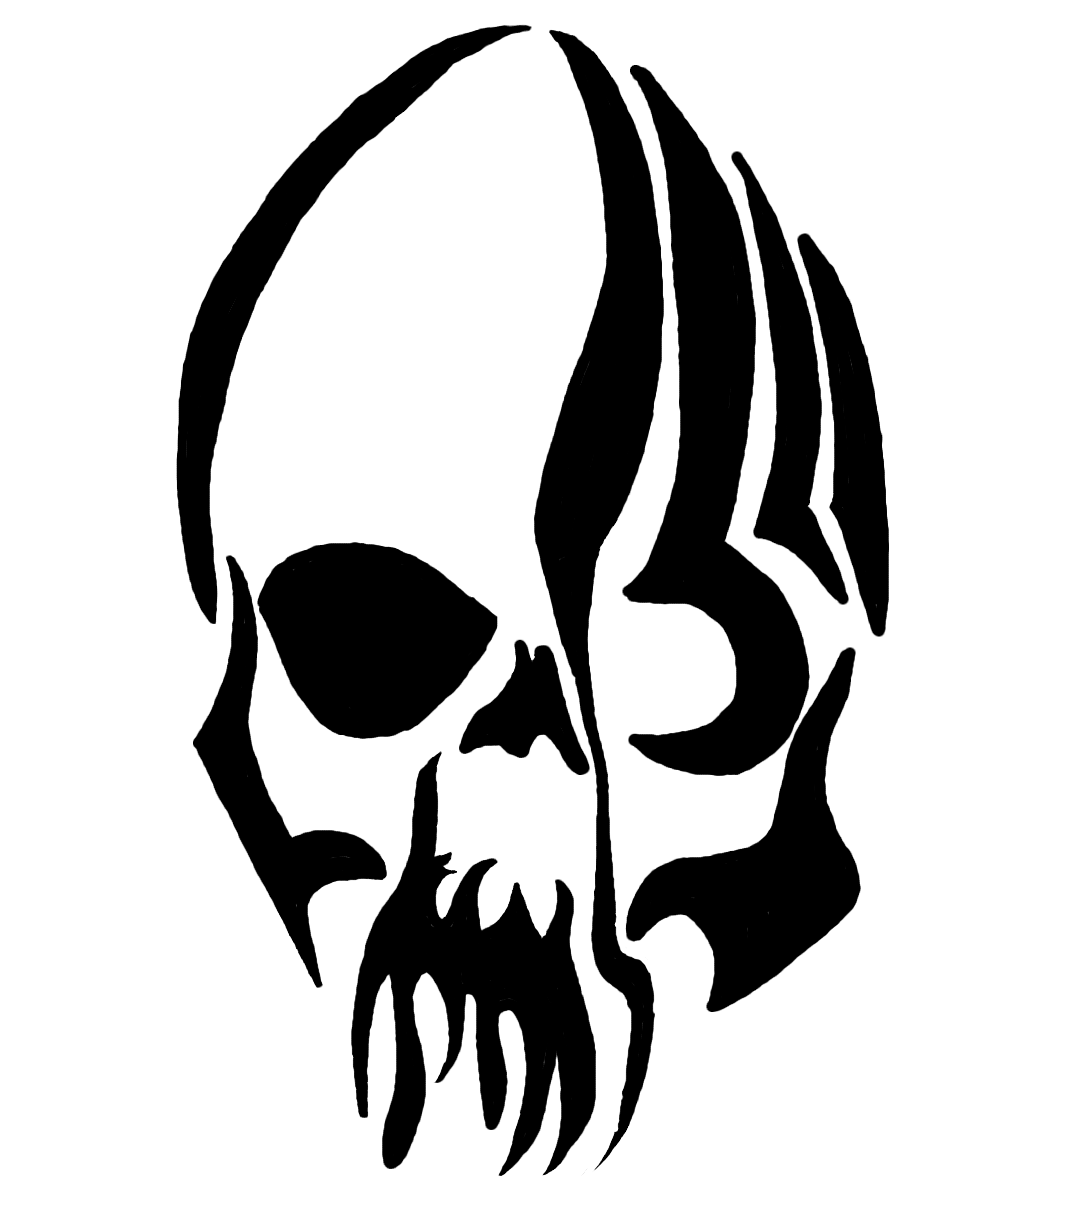 Tribal Skull Tattoos - Designs and Ideas